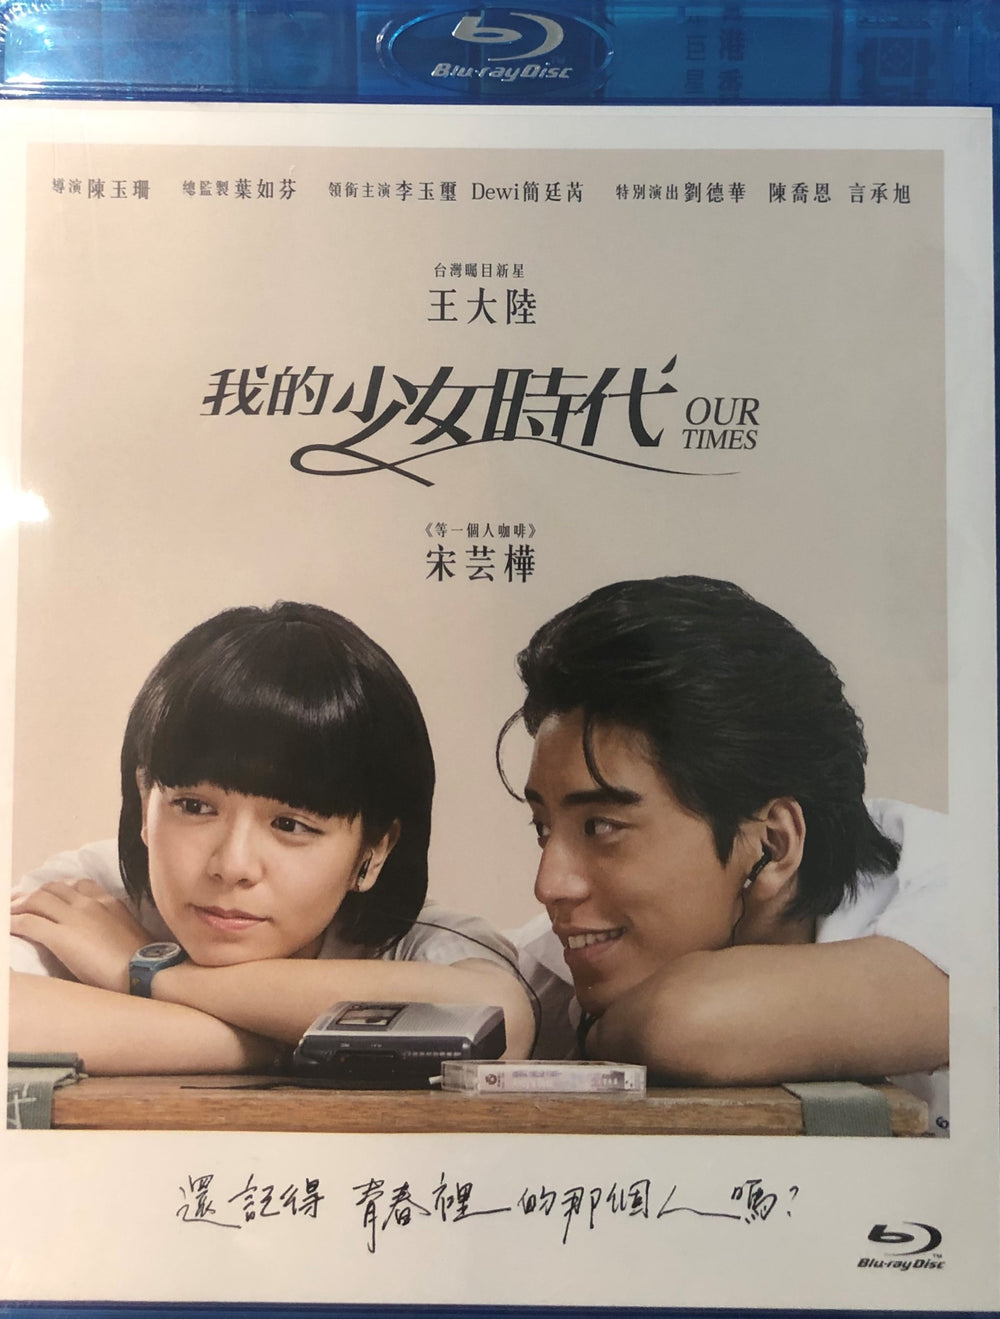 Our Times 我的少女時代 2015 (Taiwan Movie) BLU-RAY with English Sub (Region A)